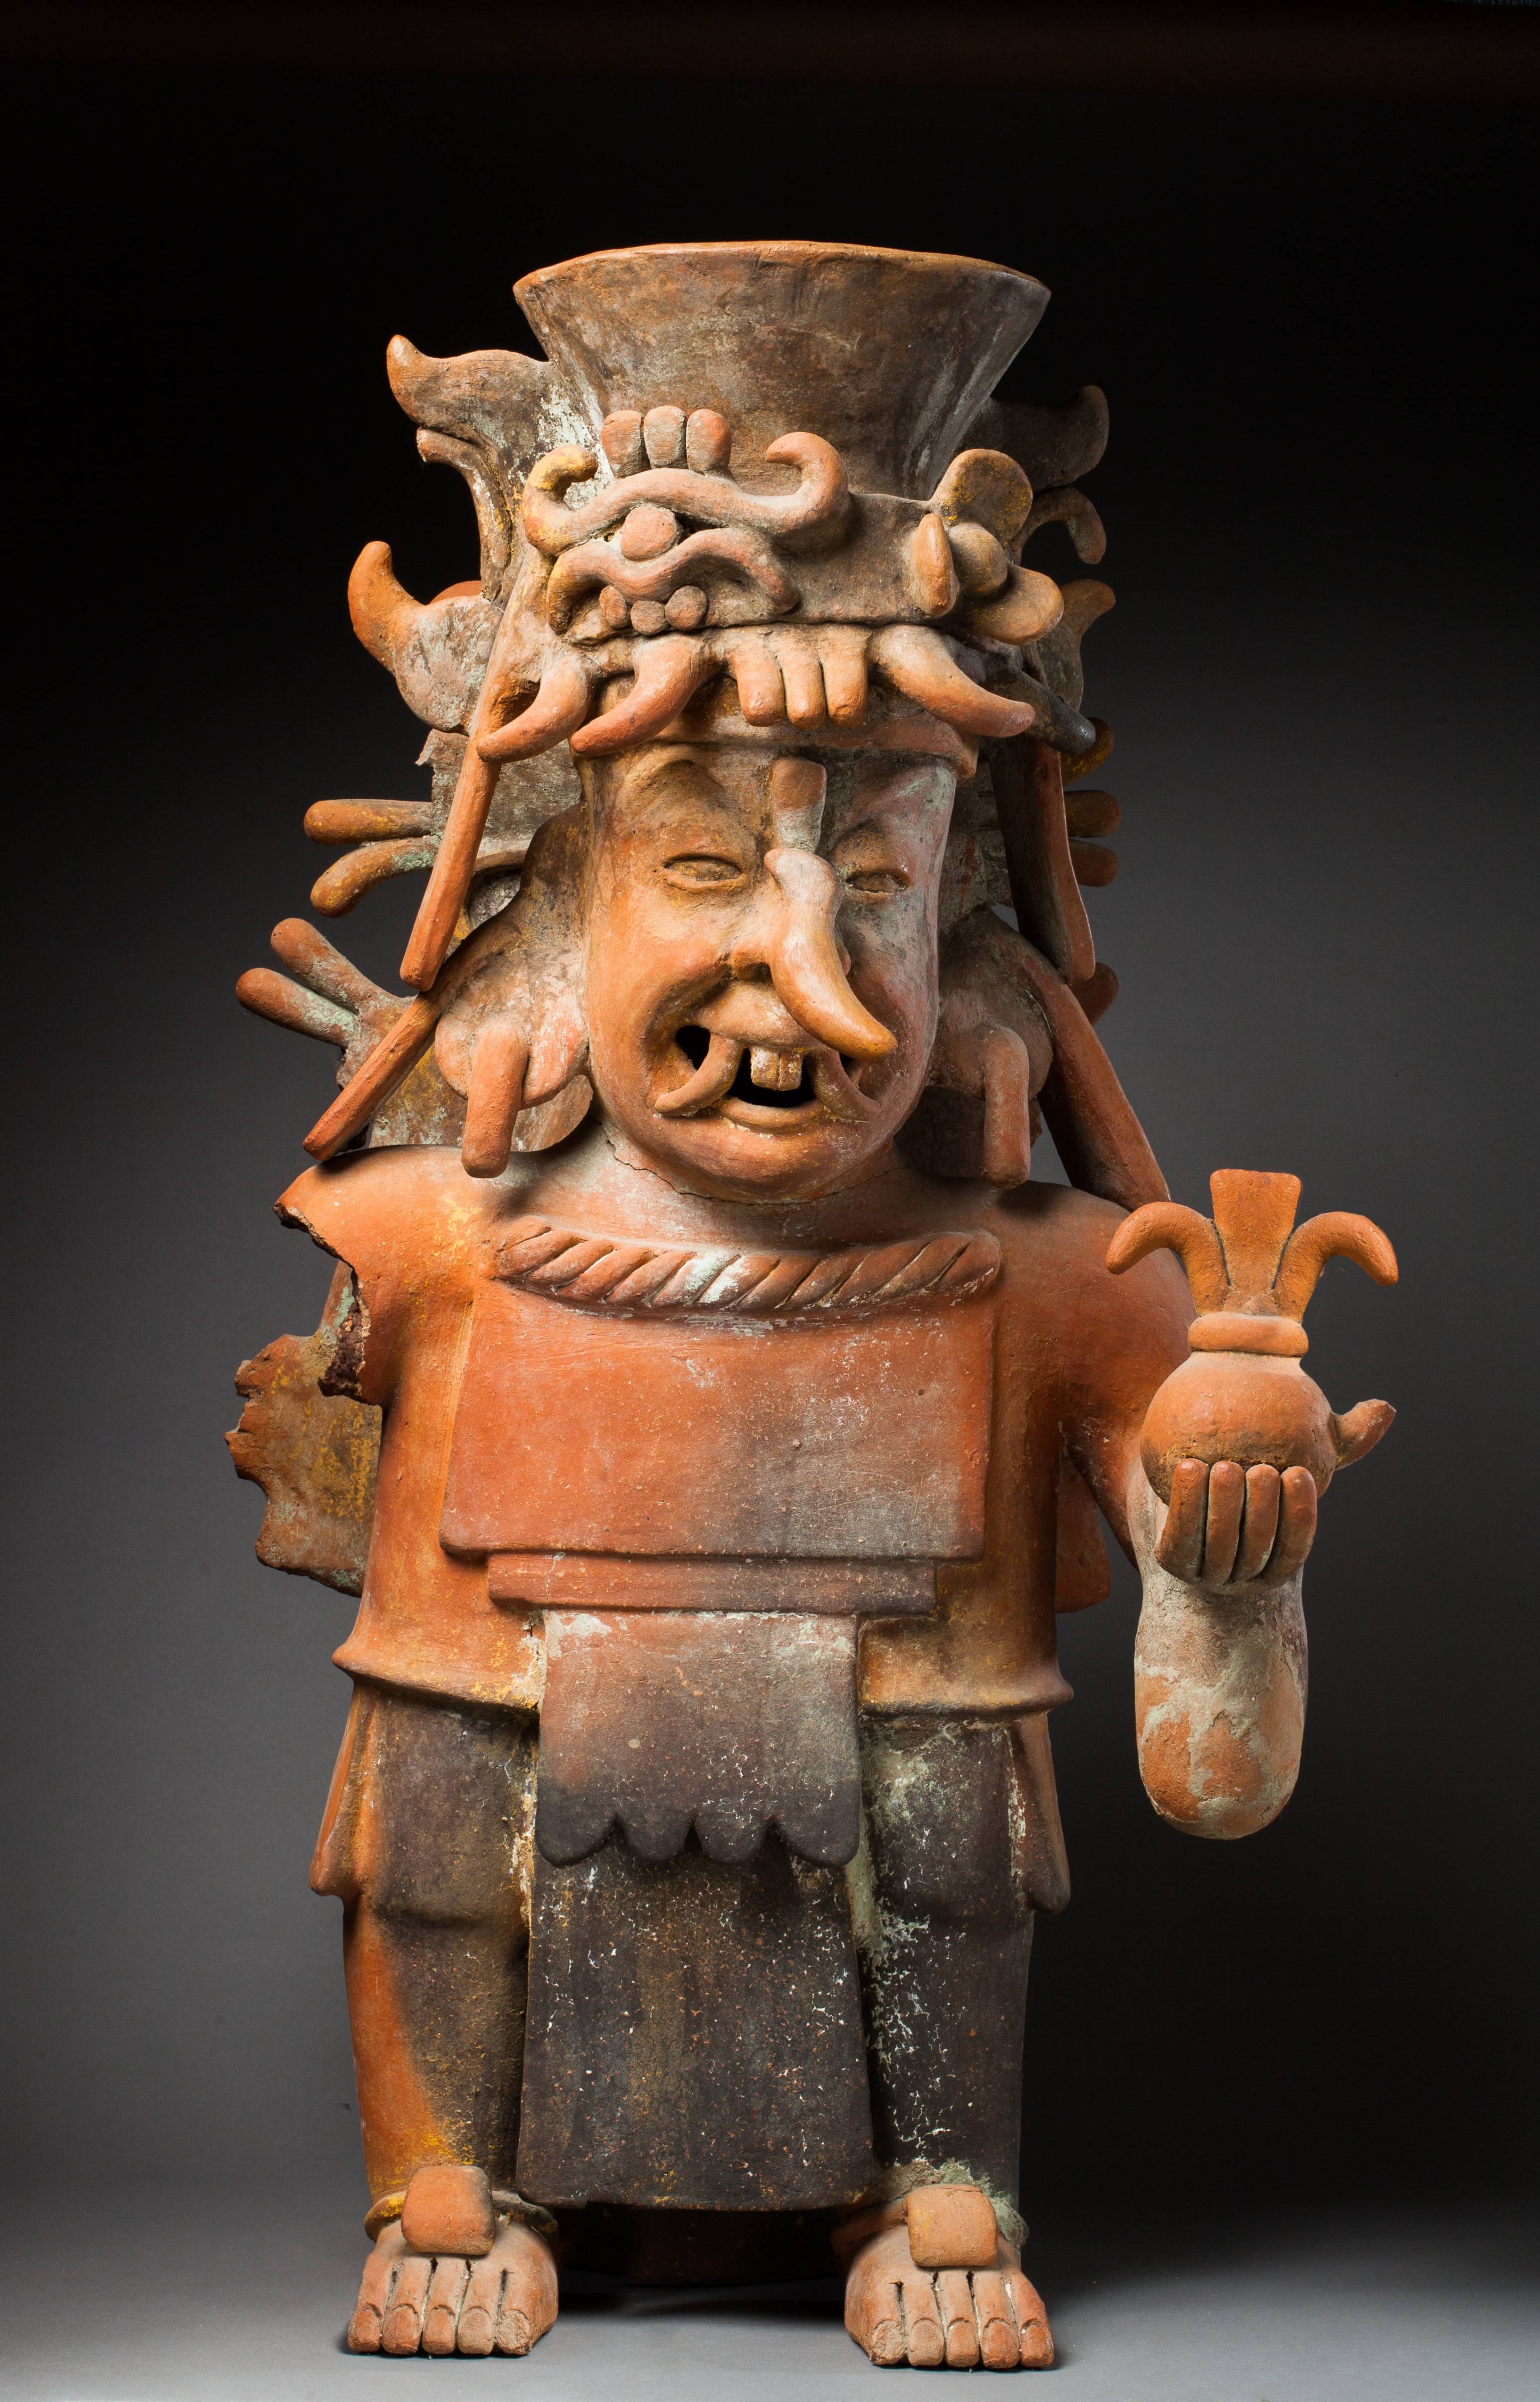 A terracotta effigy censer depicting the Maya rain deity Chaac. From Mexico, 1200-1500 CE.jpg